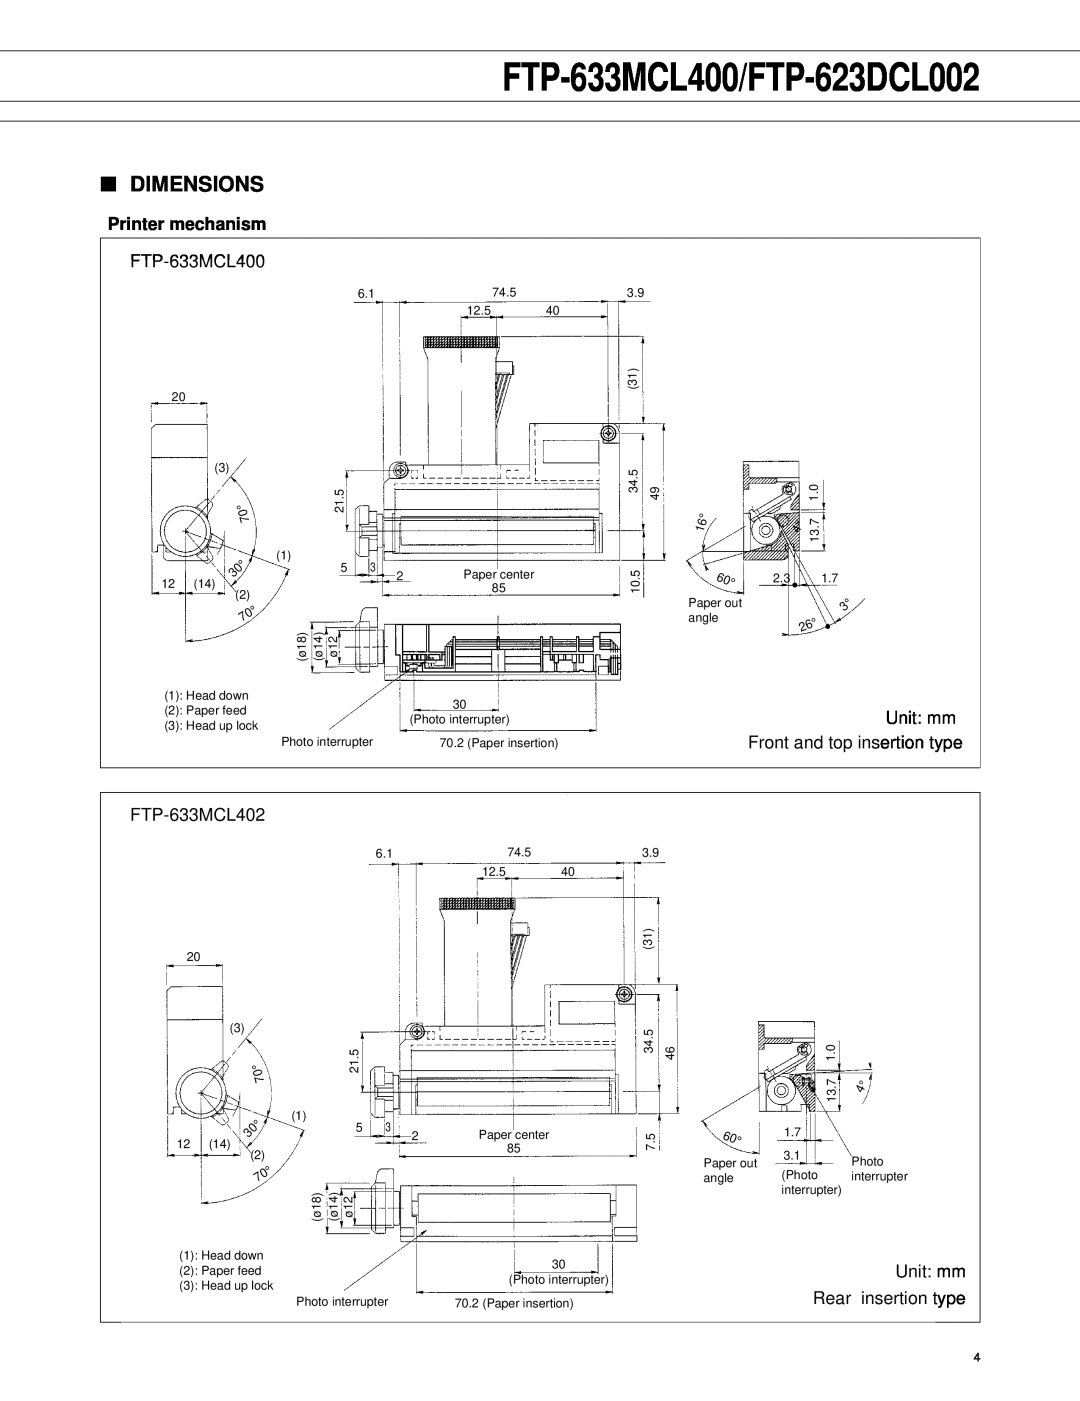 Fujitsu manual Dimensions, Printer mechanism, FTP-633MCL400/FTP-623DCL002 